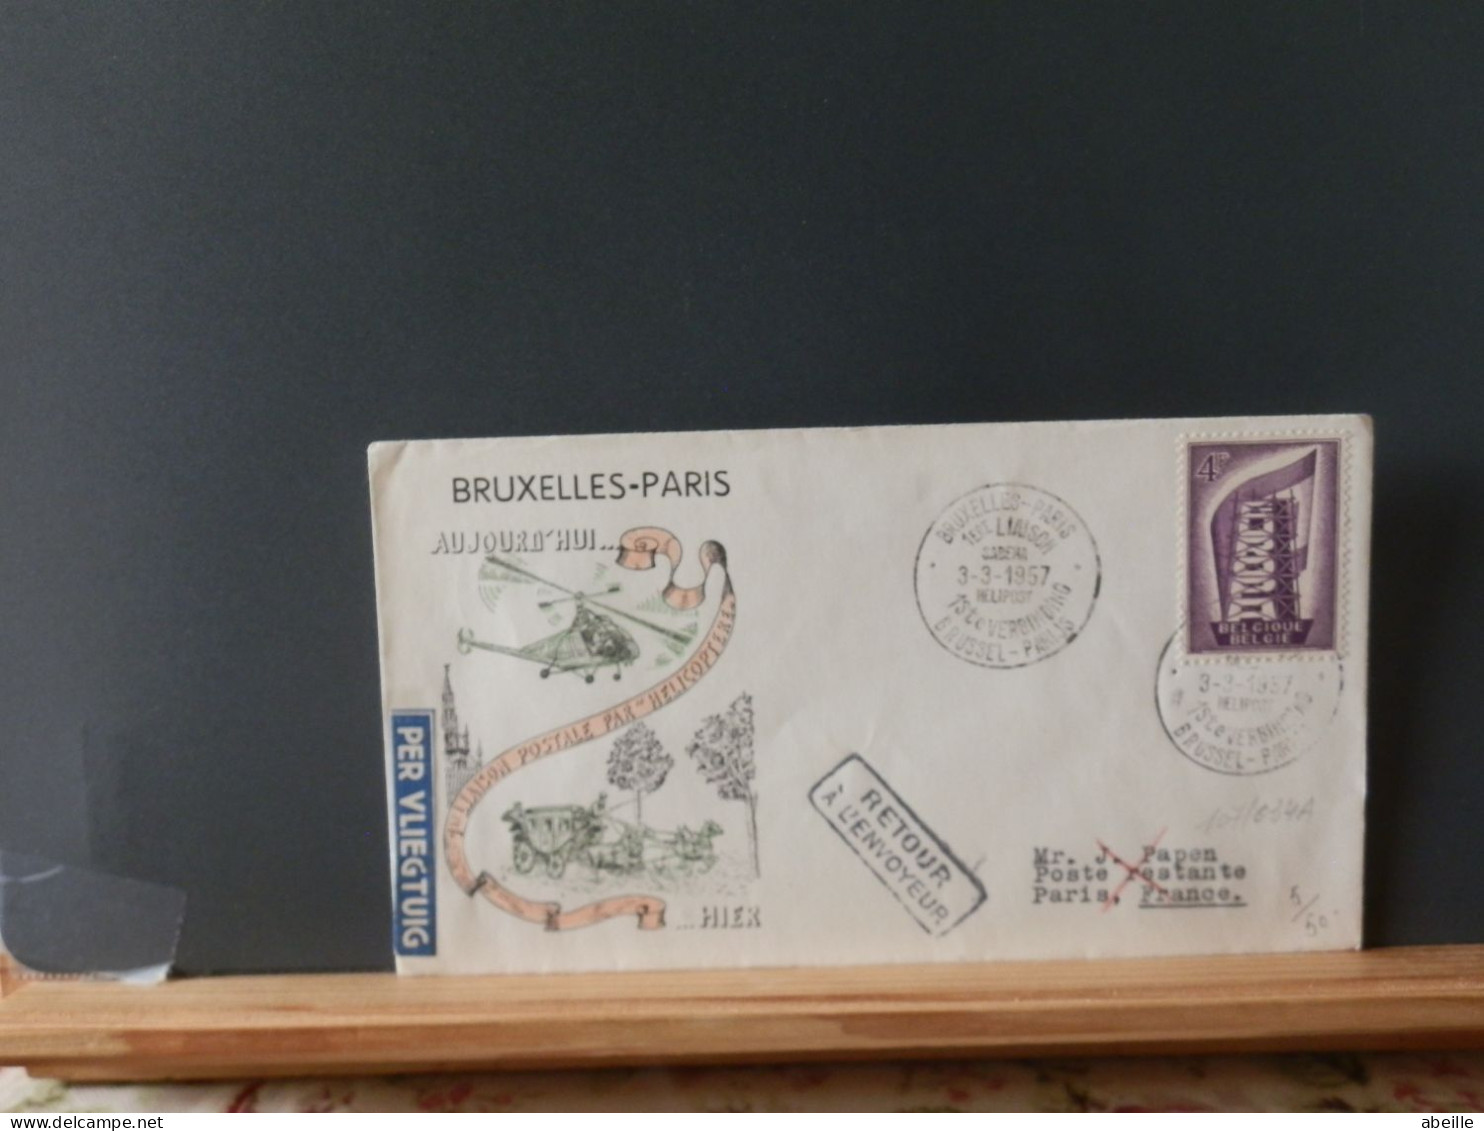 107/034A  DOC. SABENA  1° VOL HELI PARIS 1957 - Covers & Documents